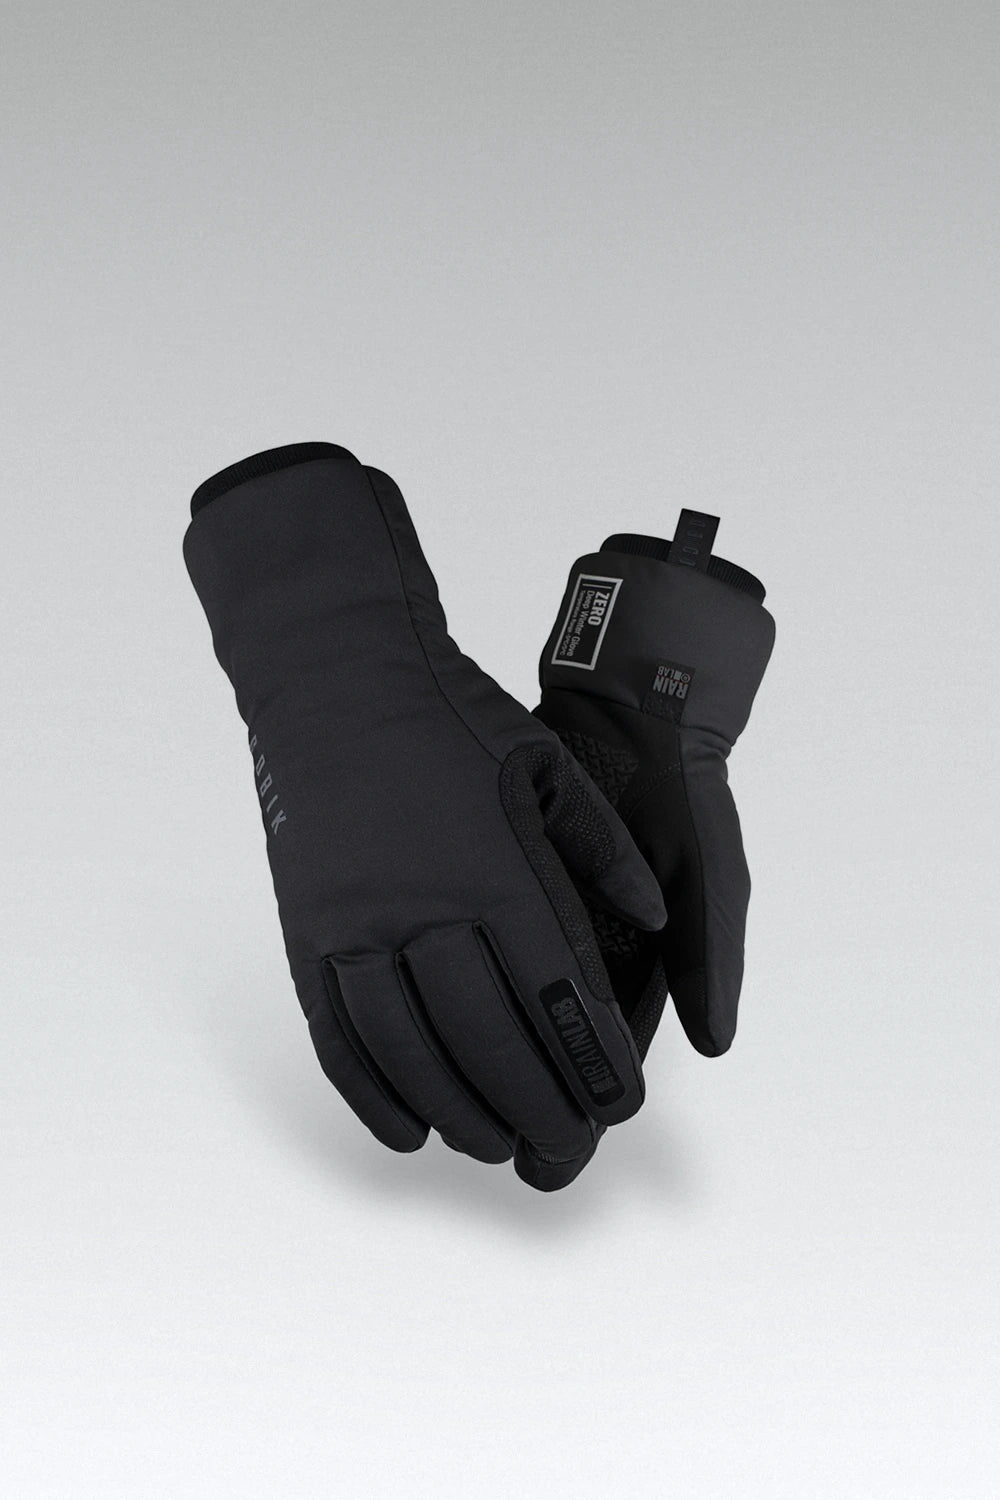 Gants Termico Primaloft Nuuk True black Taille XL